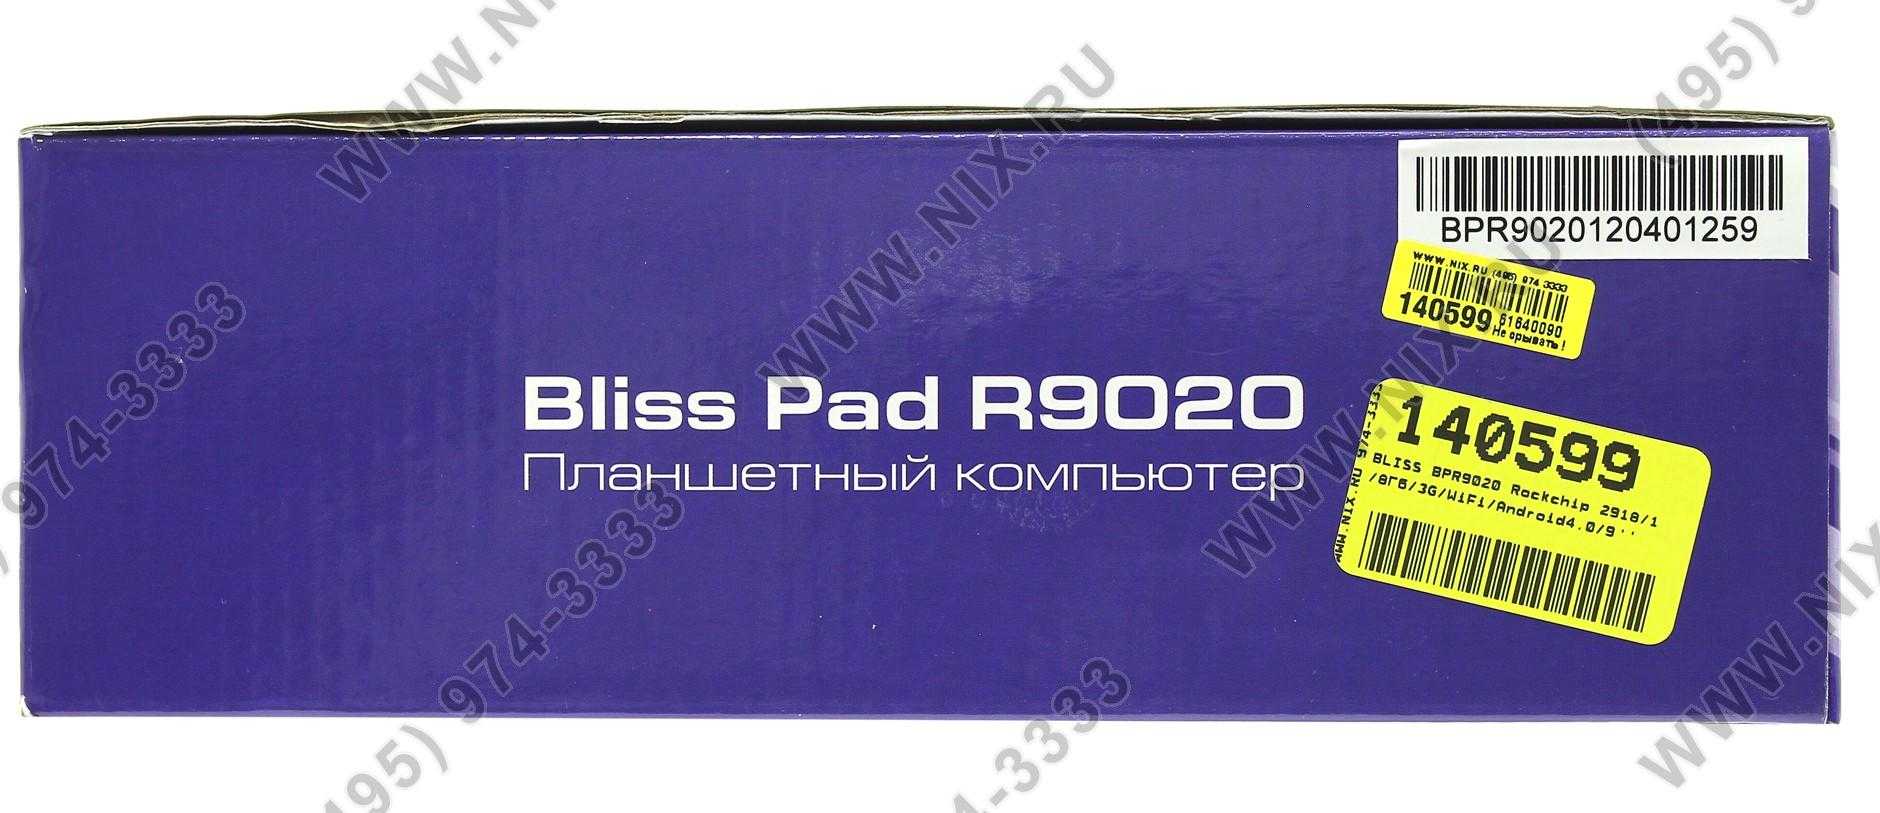 Bliss pad r9020